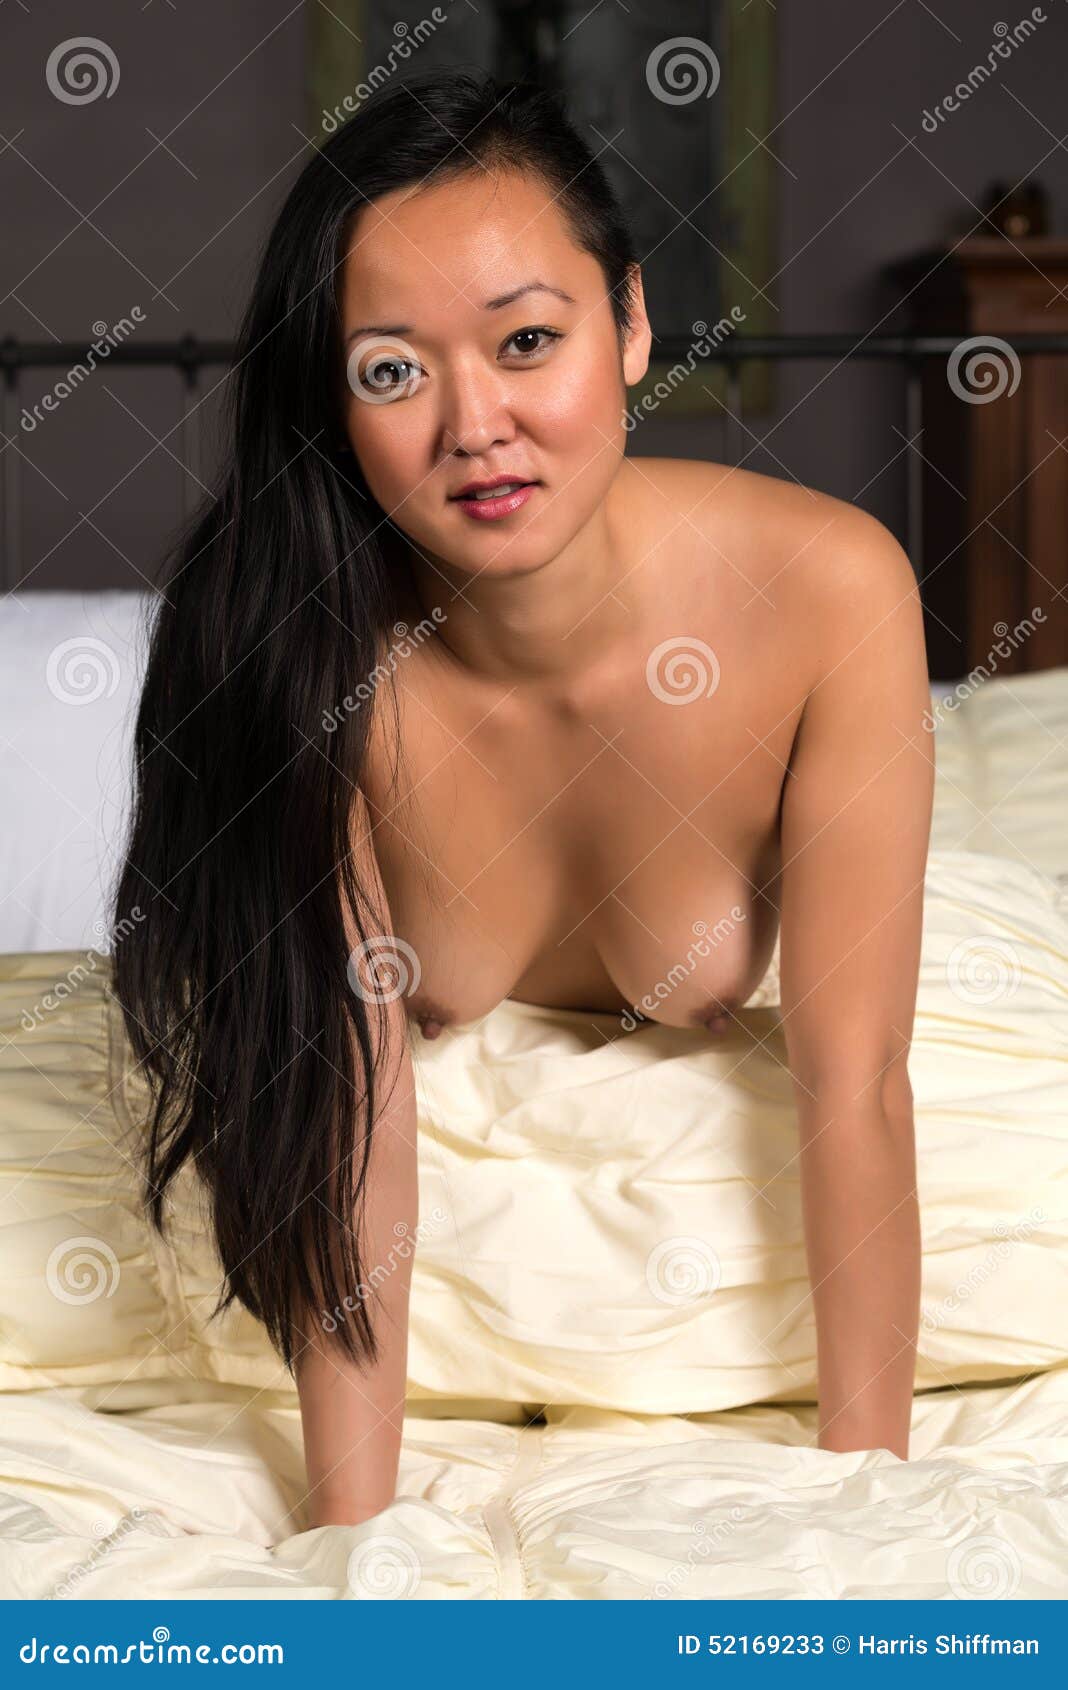 alec cumming recommends naked korean women pics pic